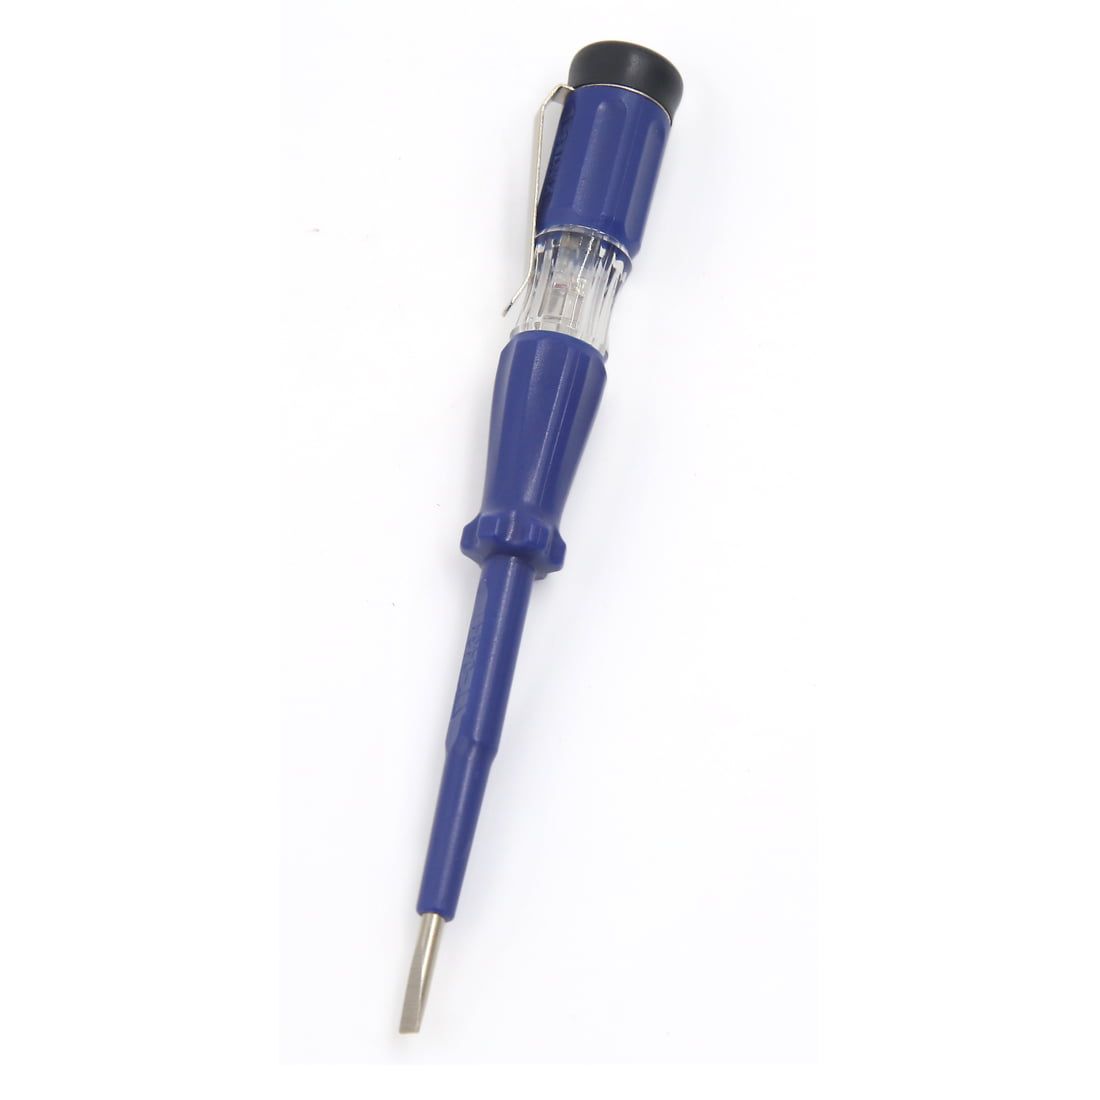 uxcell a16083100ux0454 AC 110-250V Plastic Handle Voltage Detector Electric Screwdriver Tester Blue 